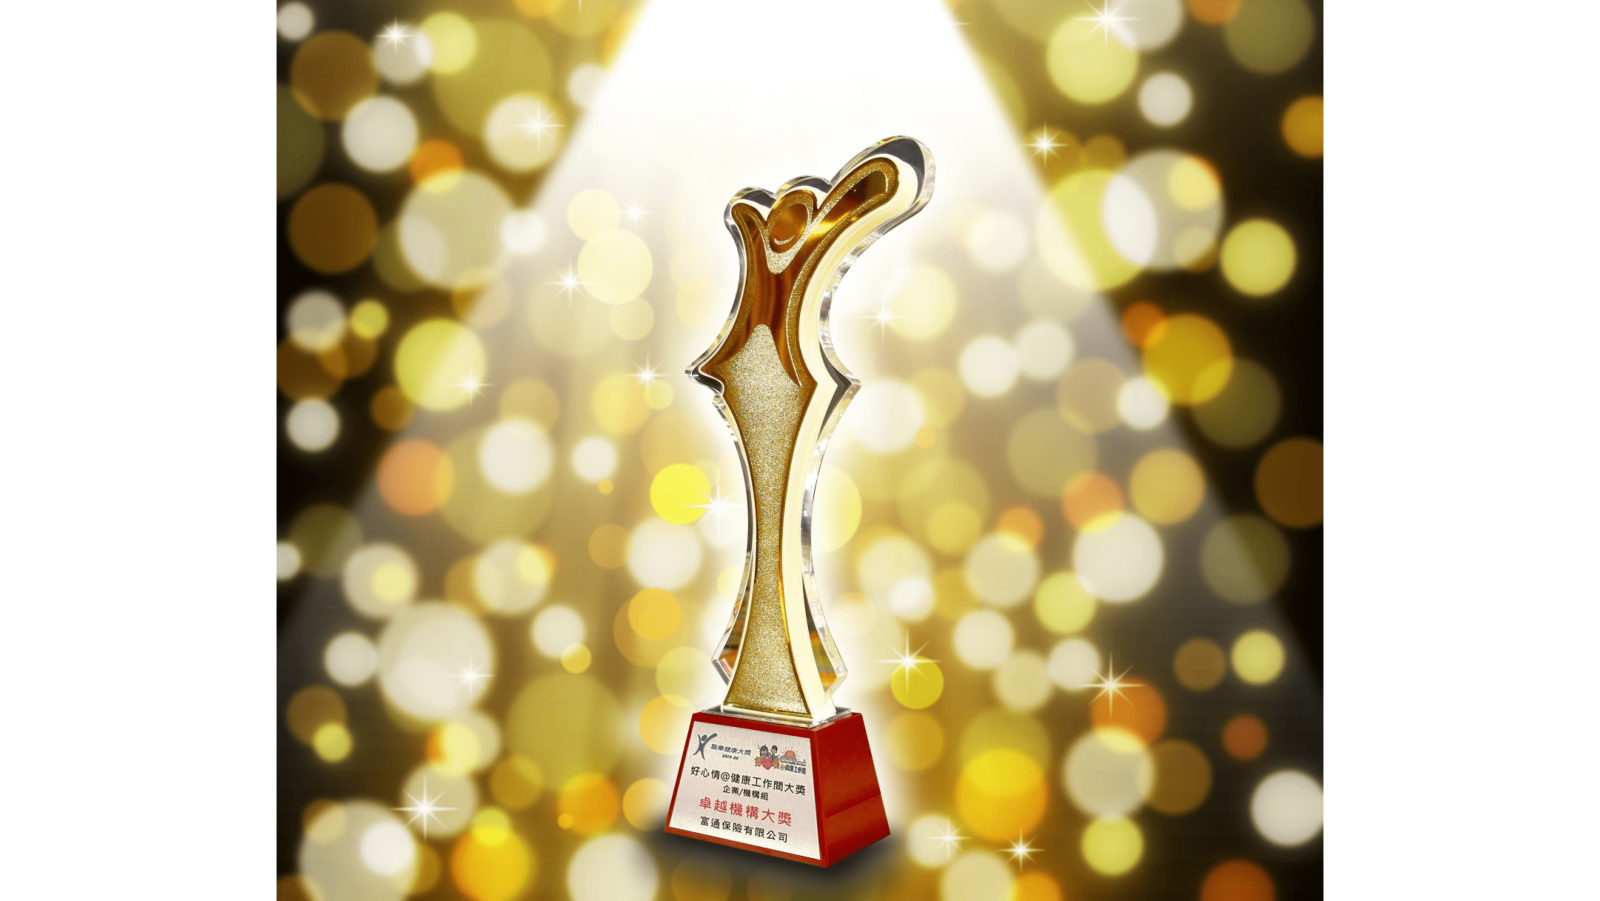  FTLife Wins Joyful@Healthy Workplace Award (Enterprise / Organisation Category) – Excellence Award